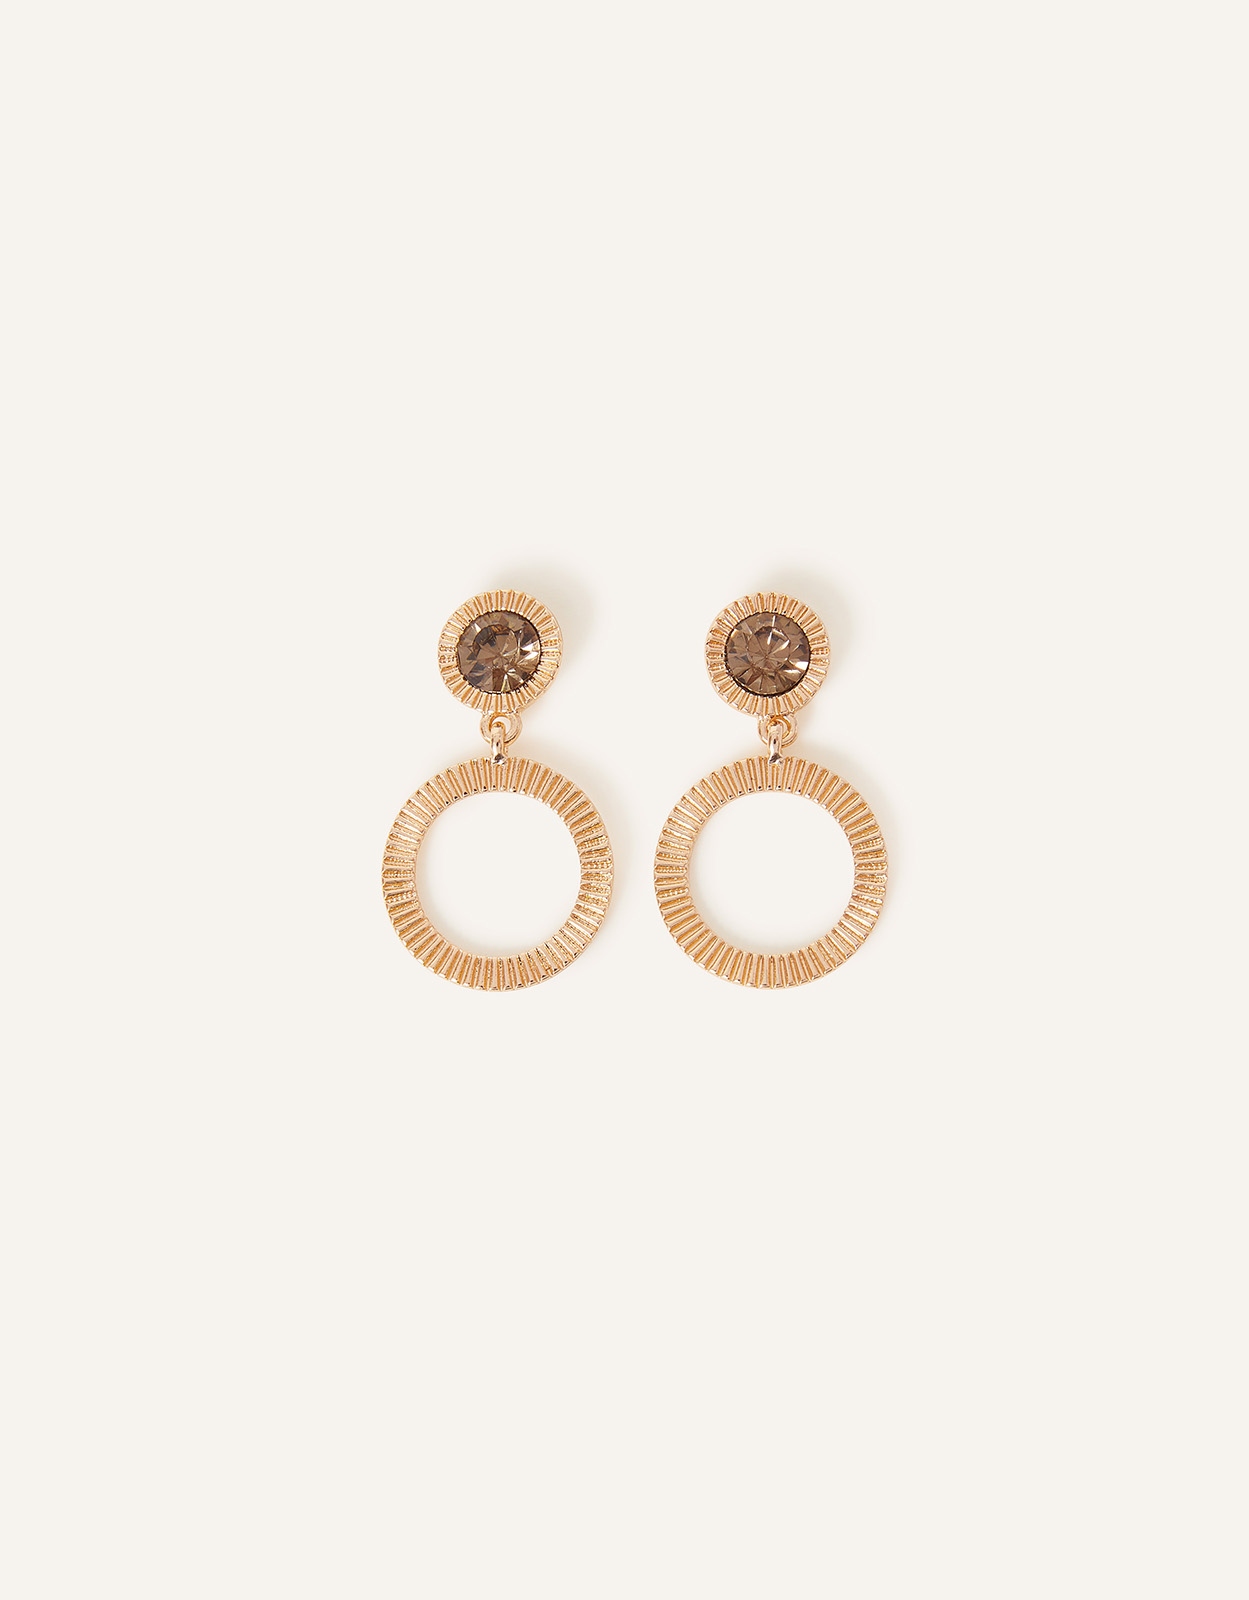 Accessorize Women's Gold Gem Ridged Circle Drop Earrings, Size: 4cm